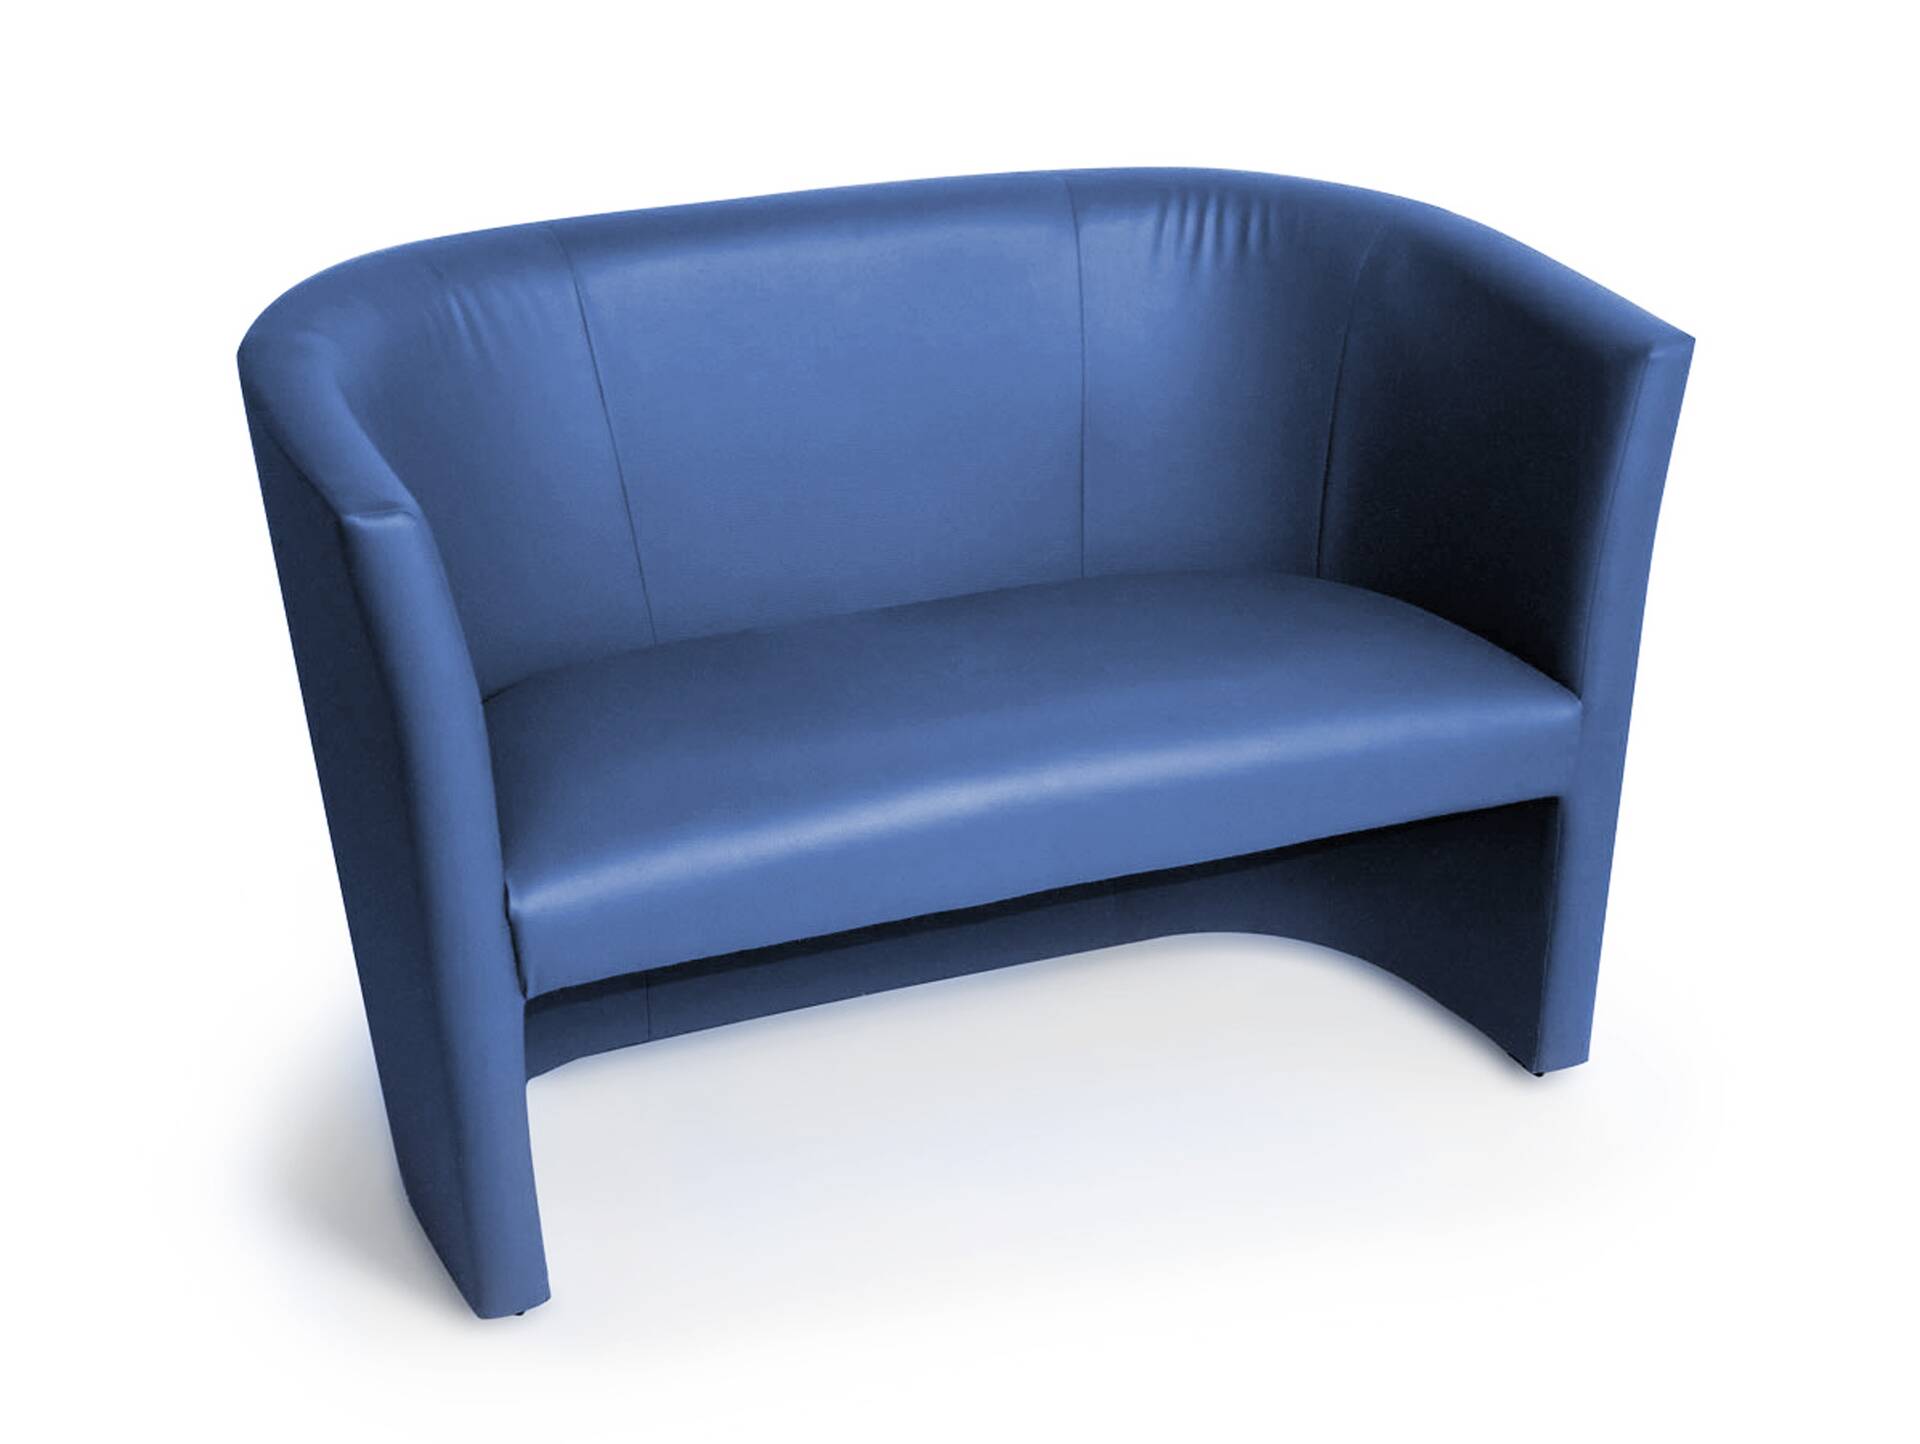 CHARLY DUO Cocktailsessel / Sessel, Material Kunstleder blau | Barhocker